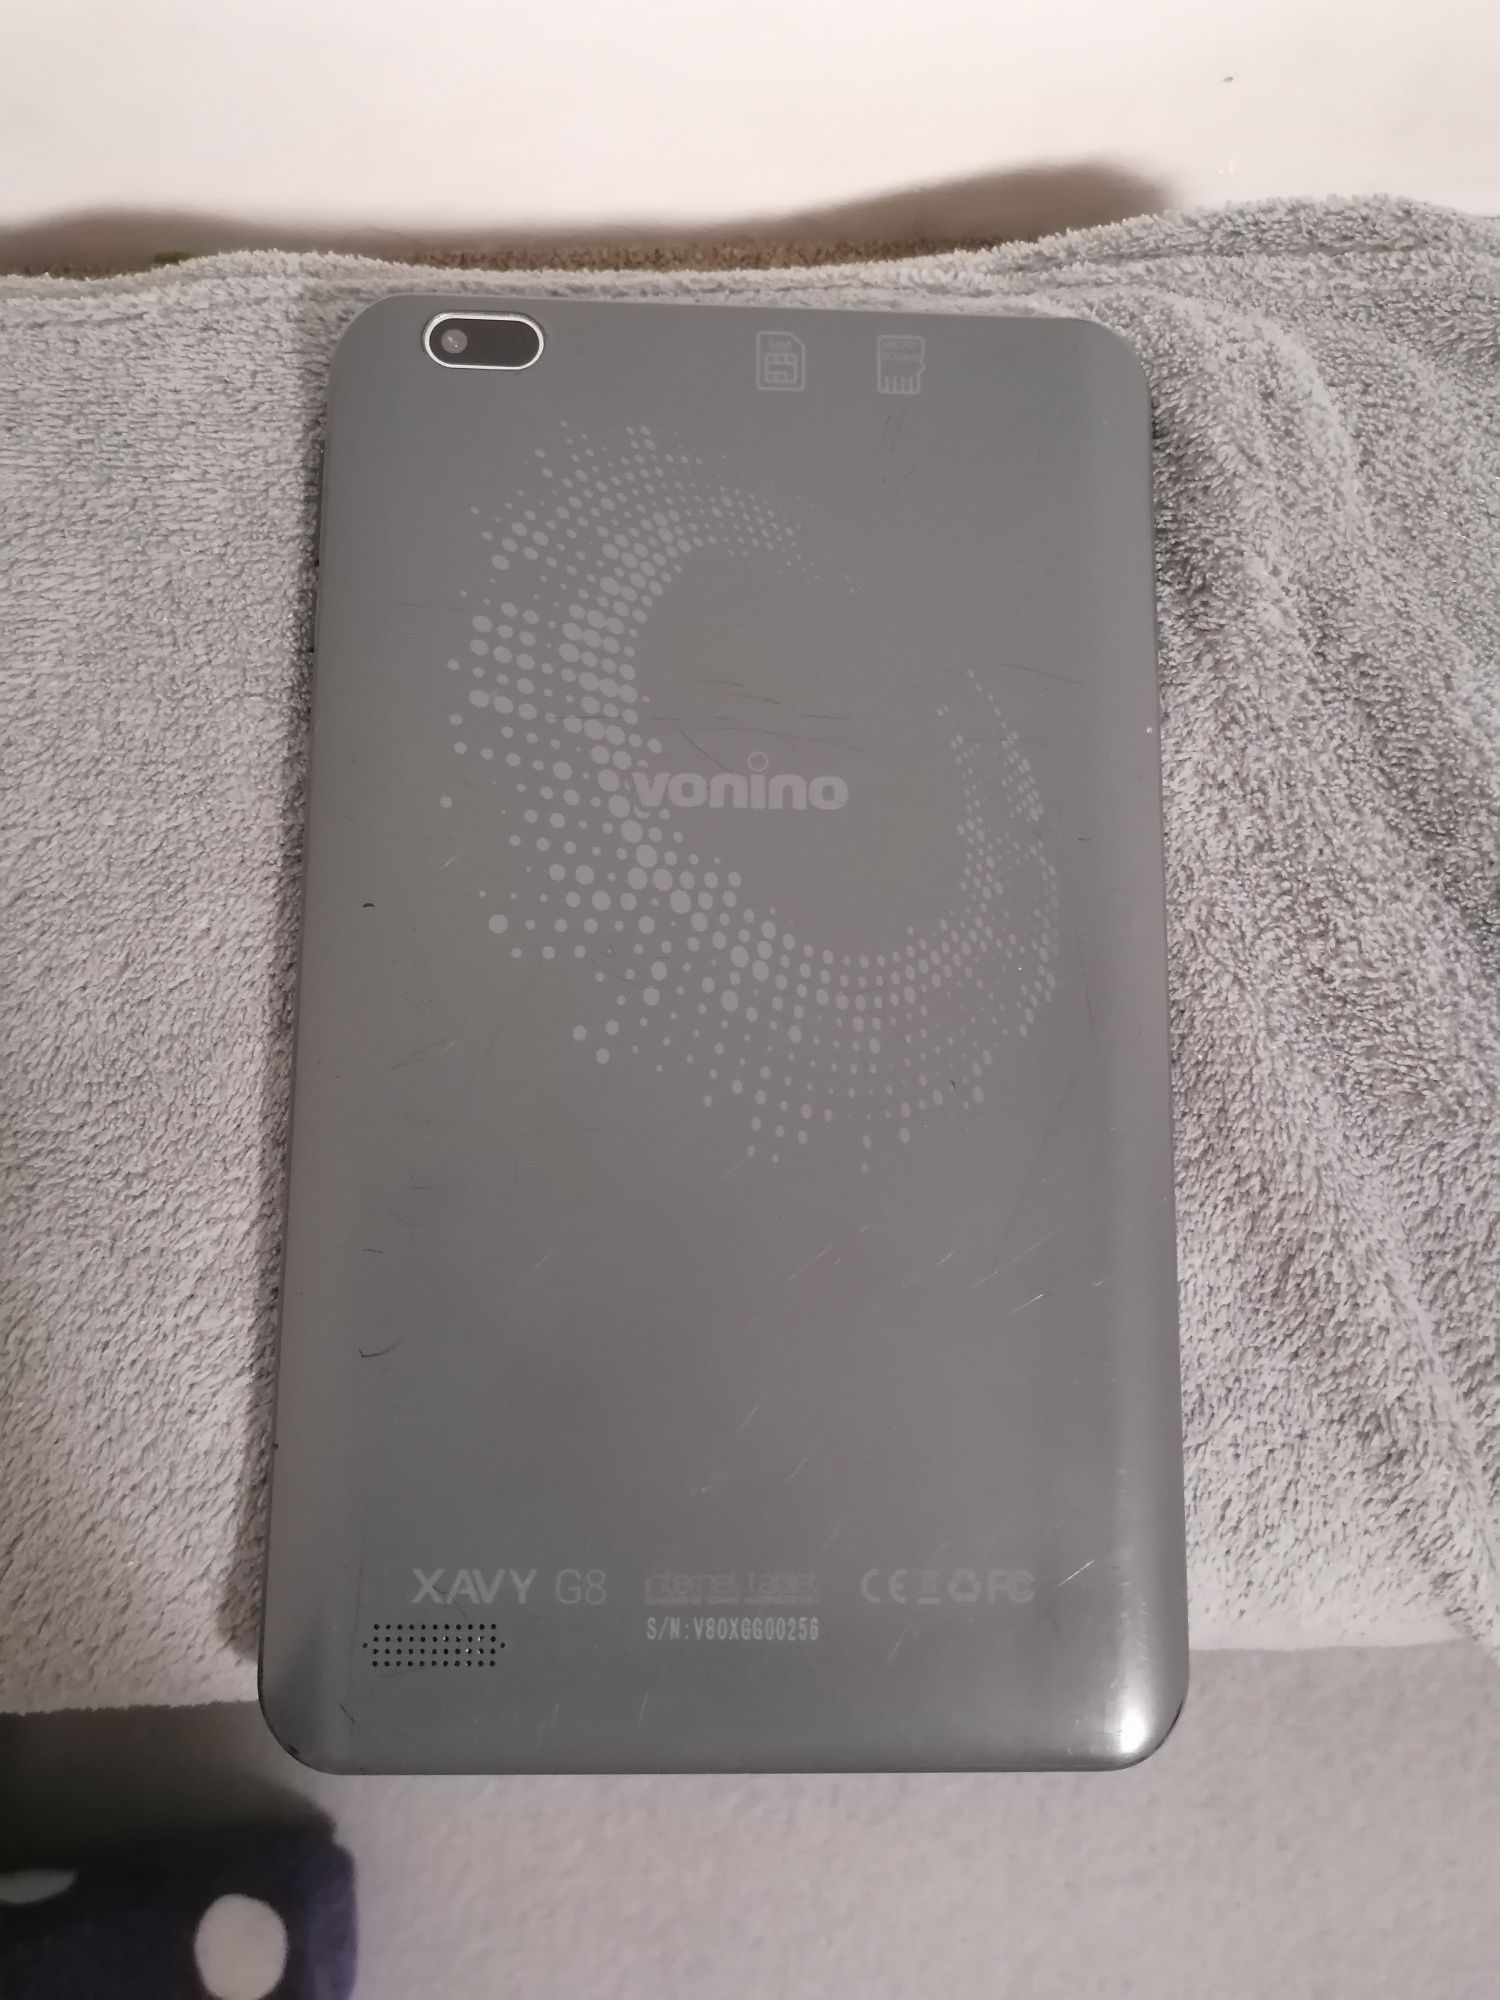 Vand tableta Vonino Xavy 2gb ram, 8" DEFECTA